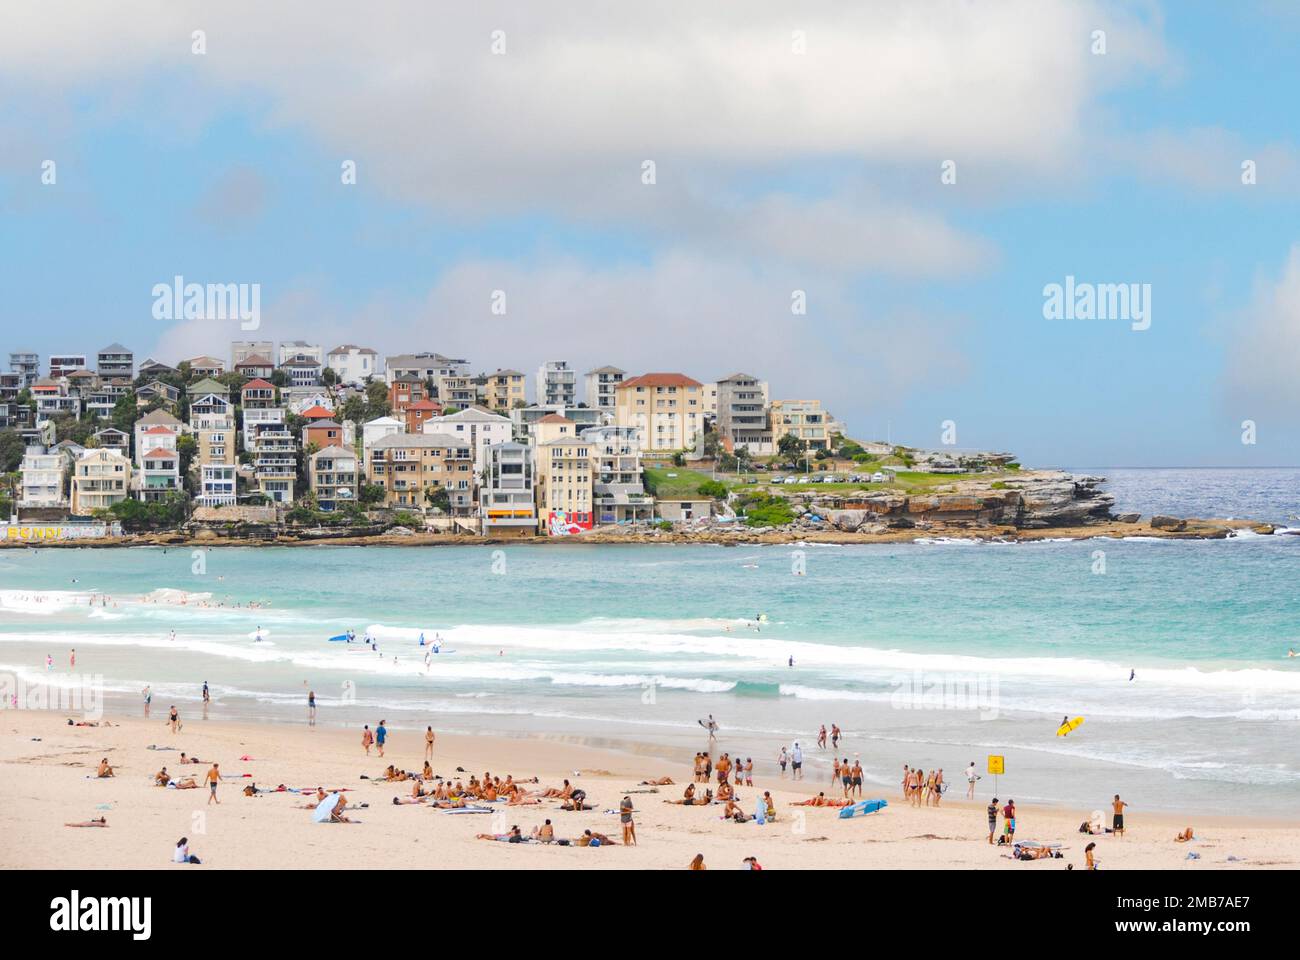 View of the beach. Bondi Beach is one of Australia’s most iconic beaches. Stock Photo